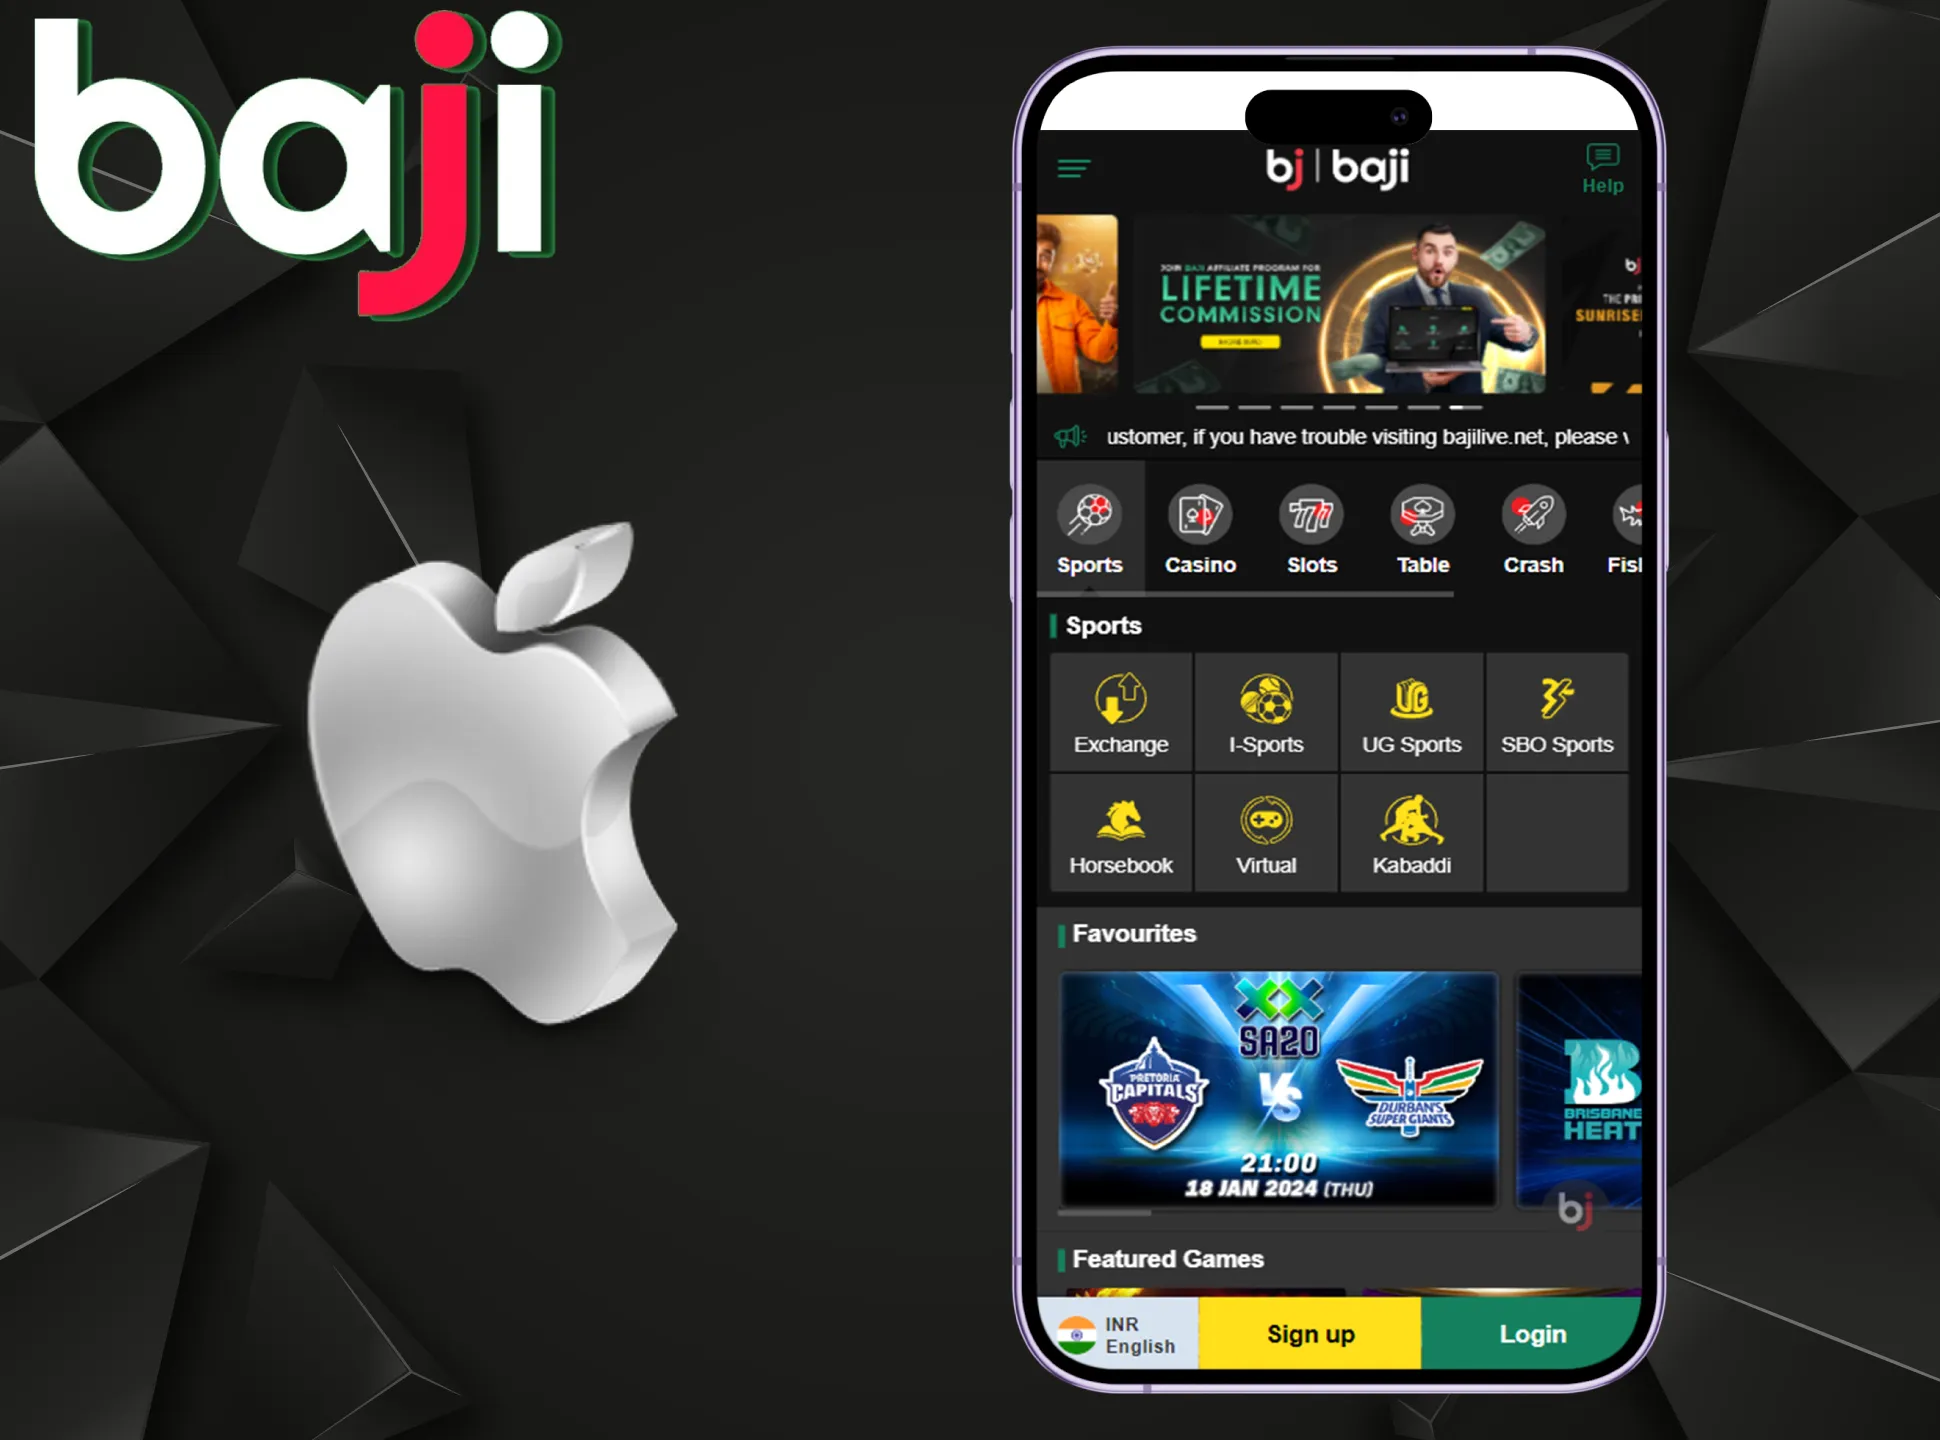 Open the Baji app on your iPhone or iPad.